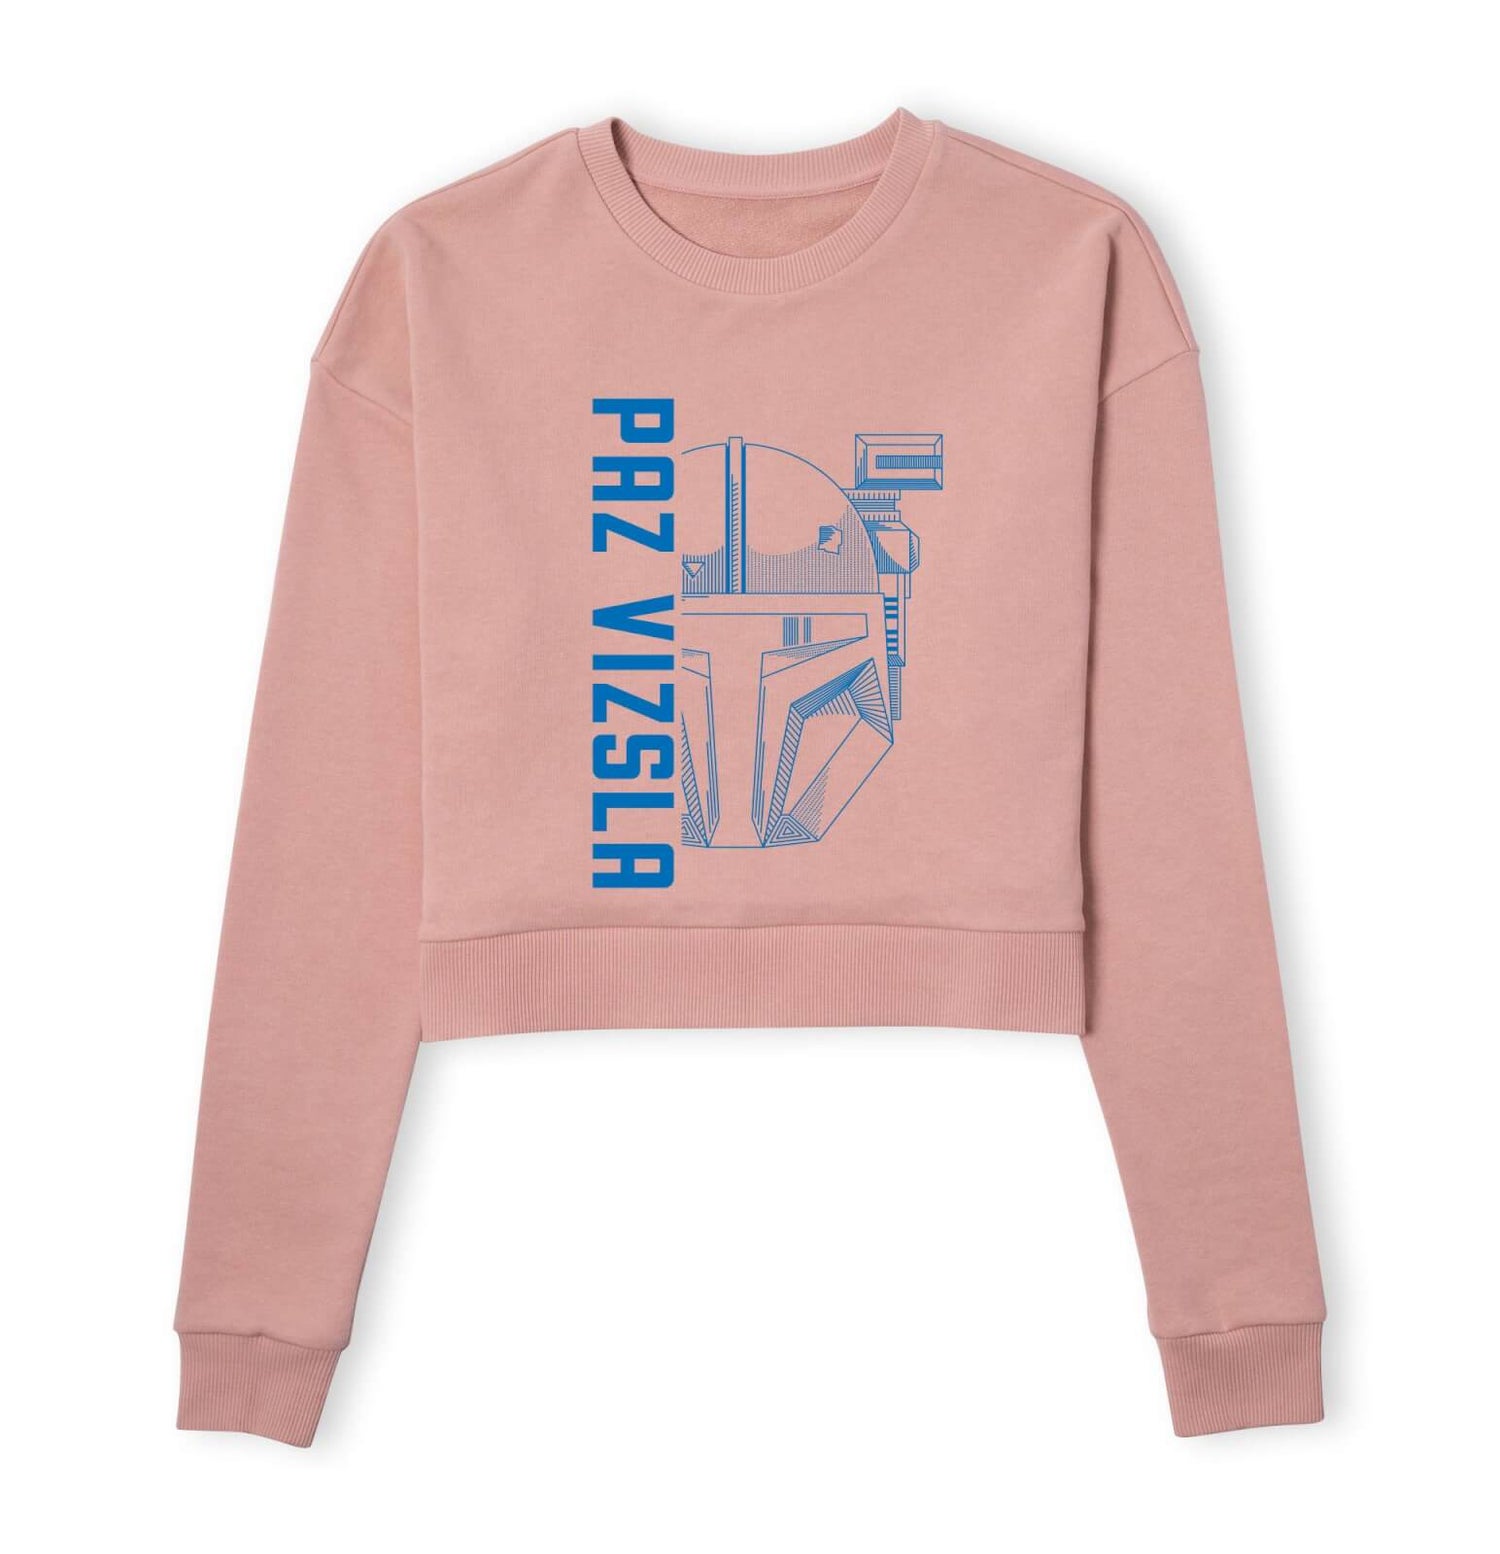 Star Wars The Mandalorian Paz Vizsla Women's Cropped Sweatshirt - Dusty Pink